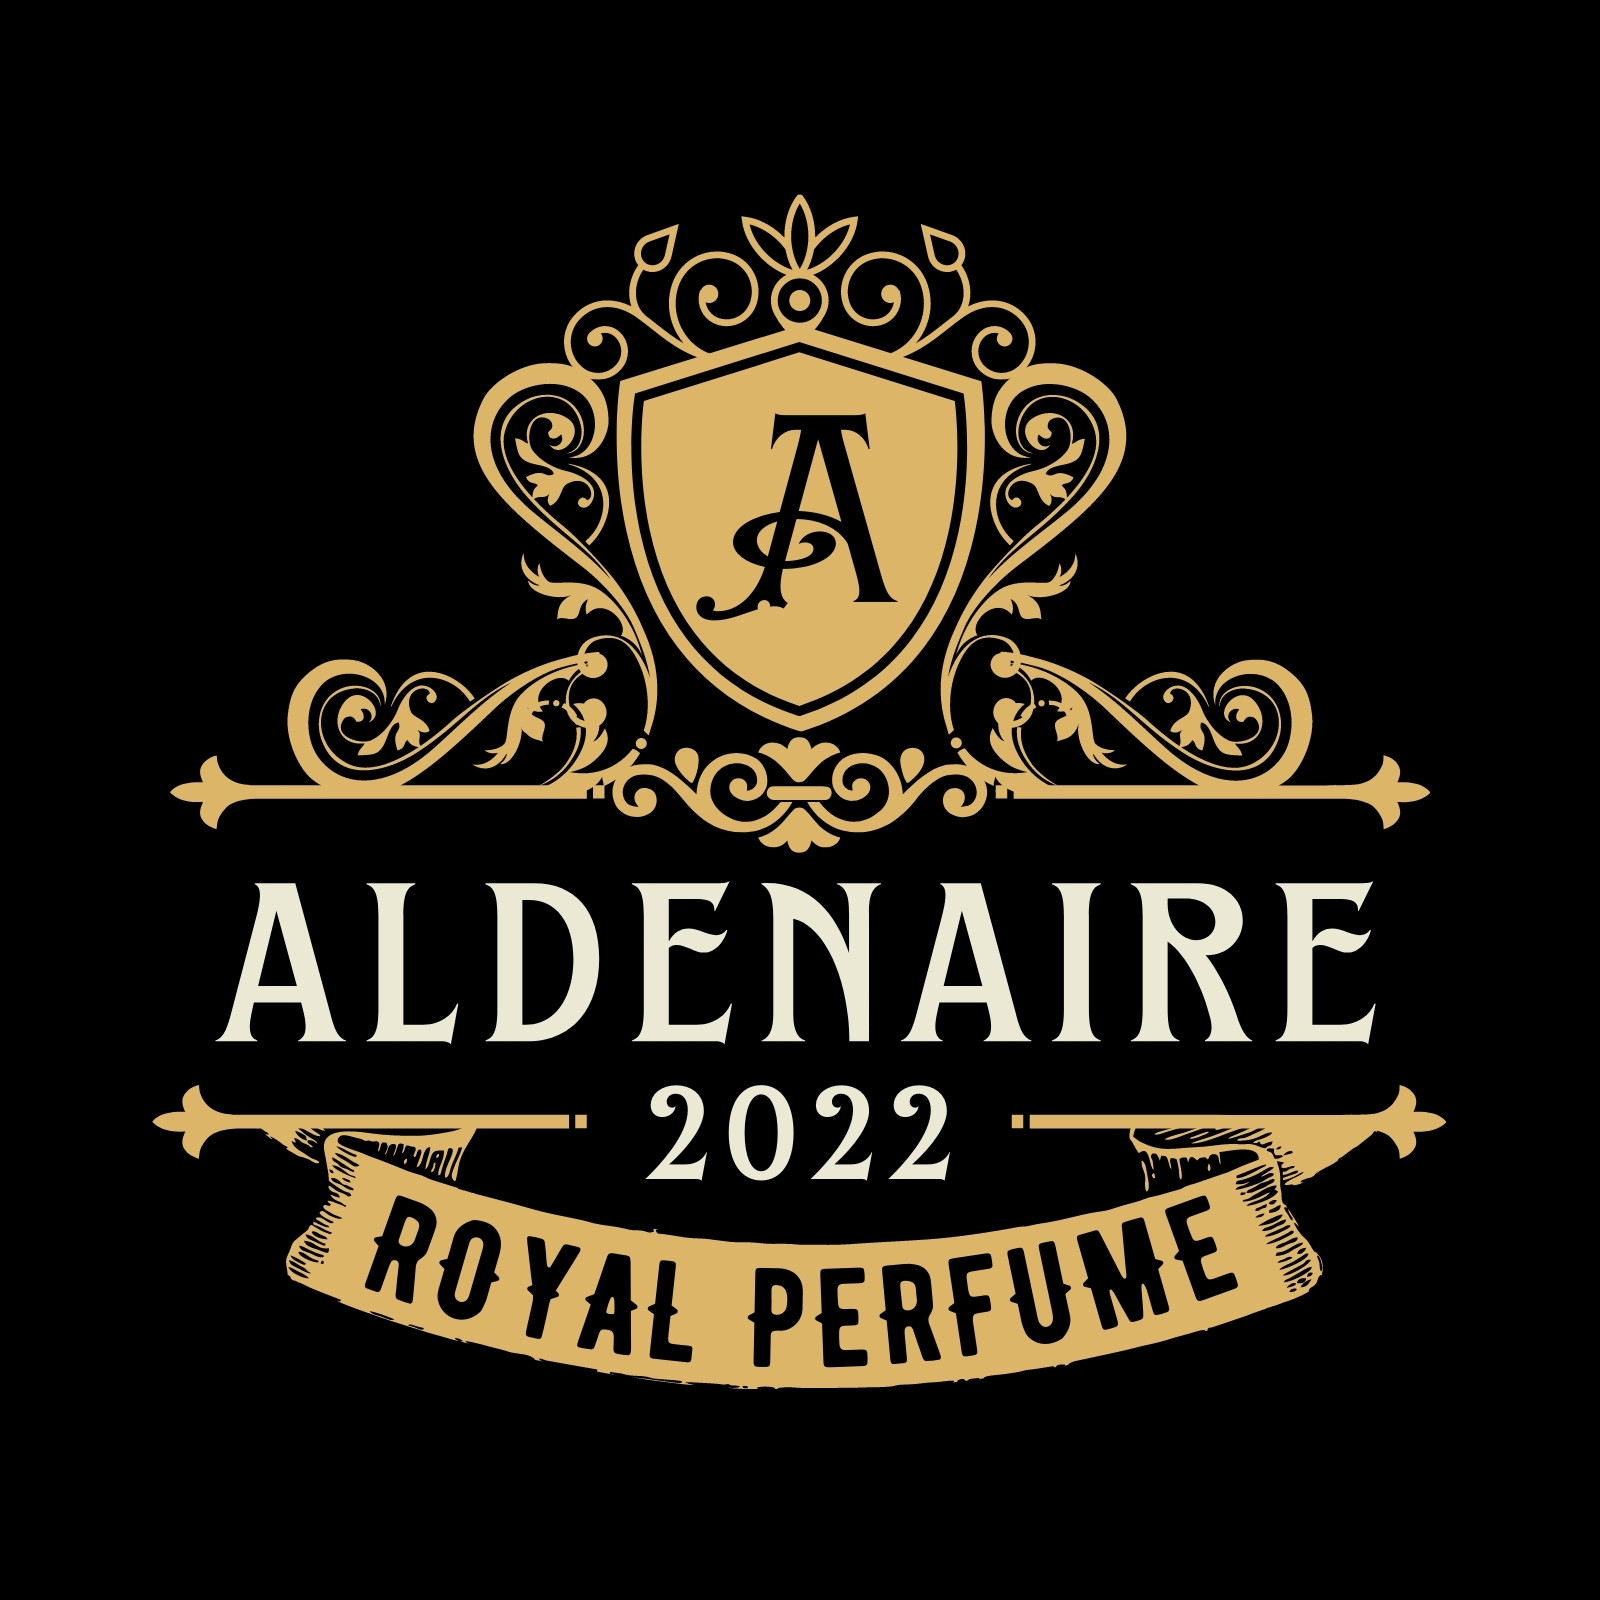 Elegant gold logo, perfume logo,brand logo Template